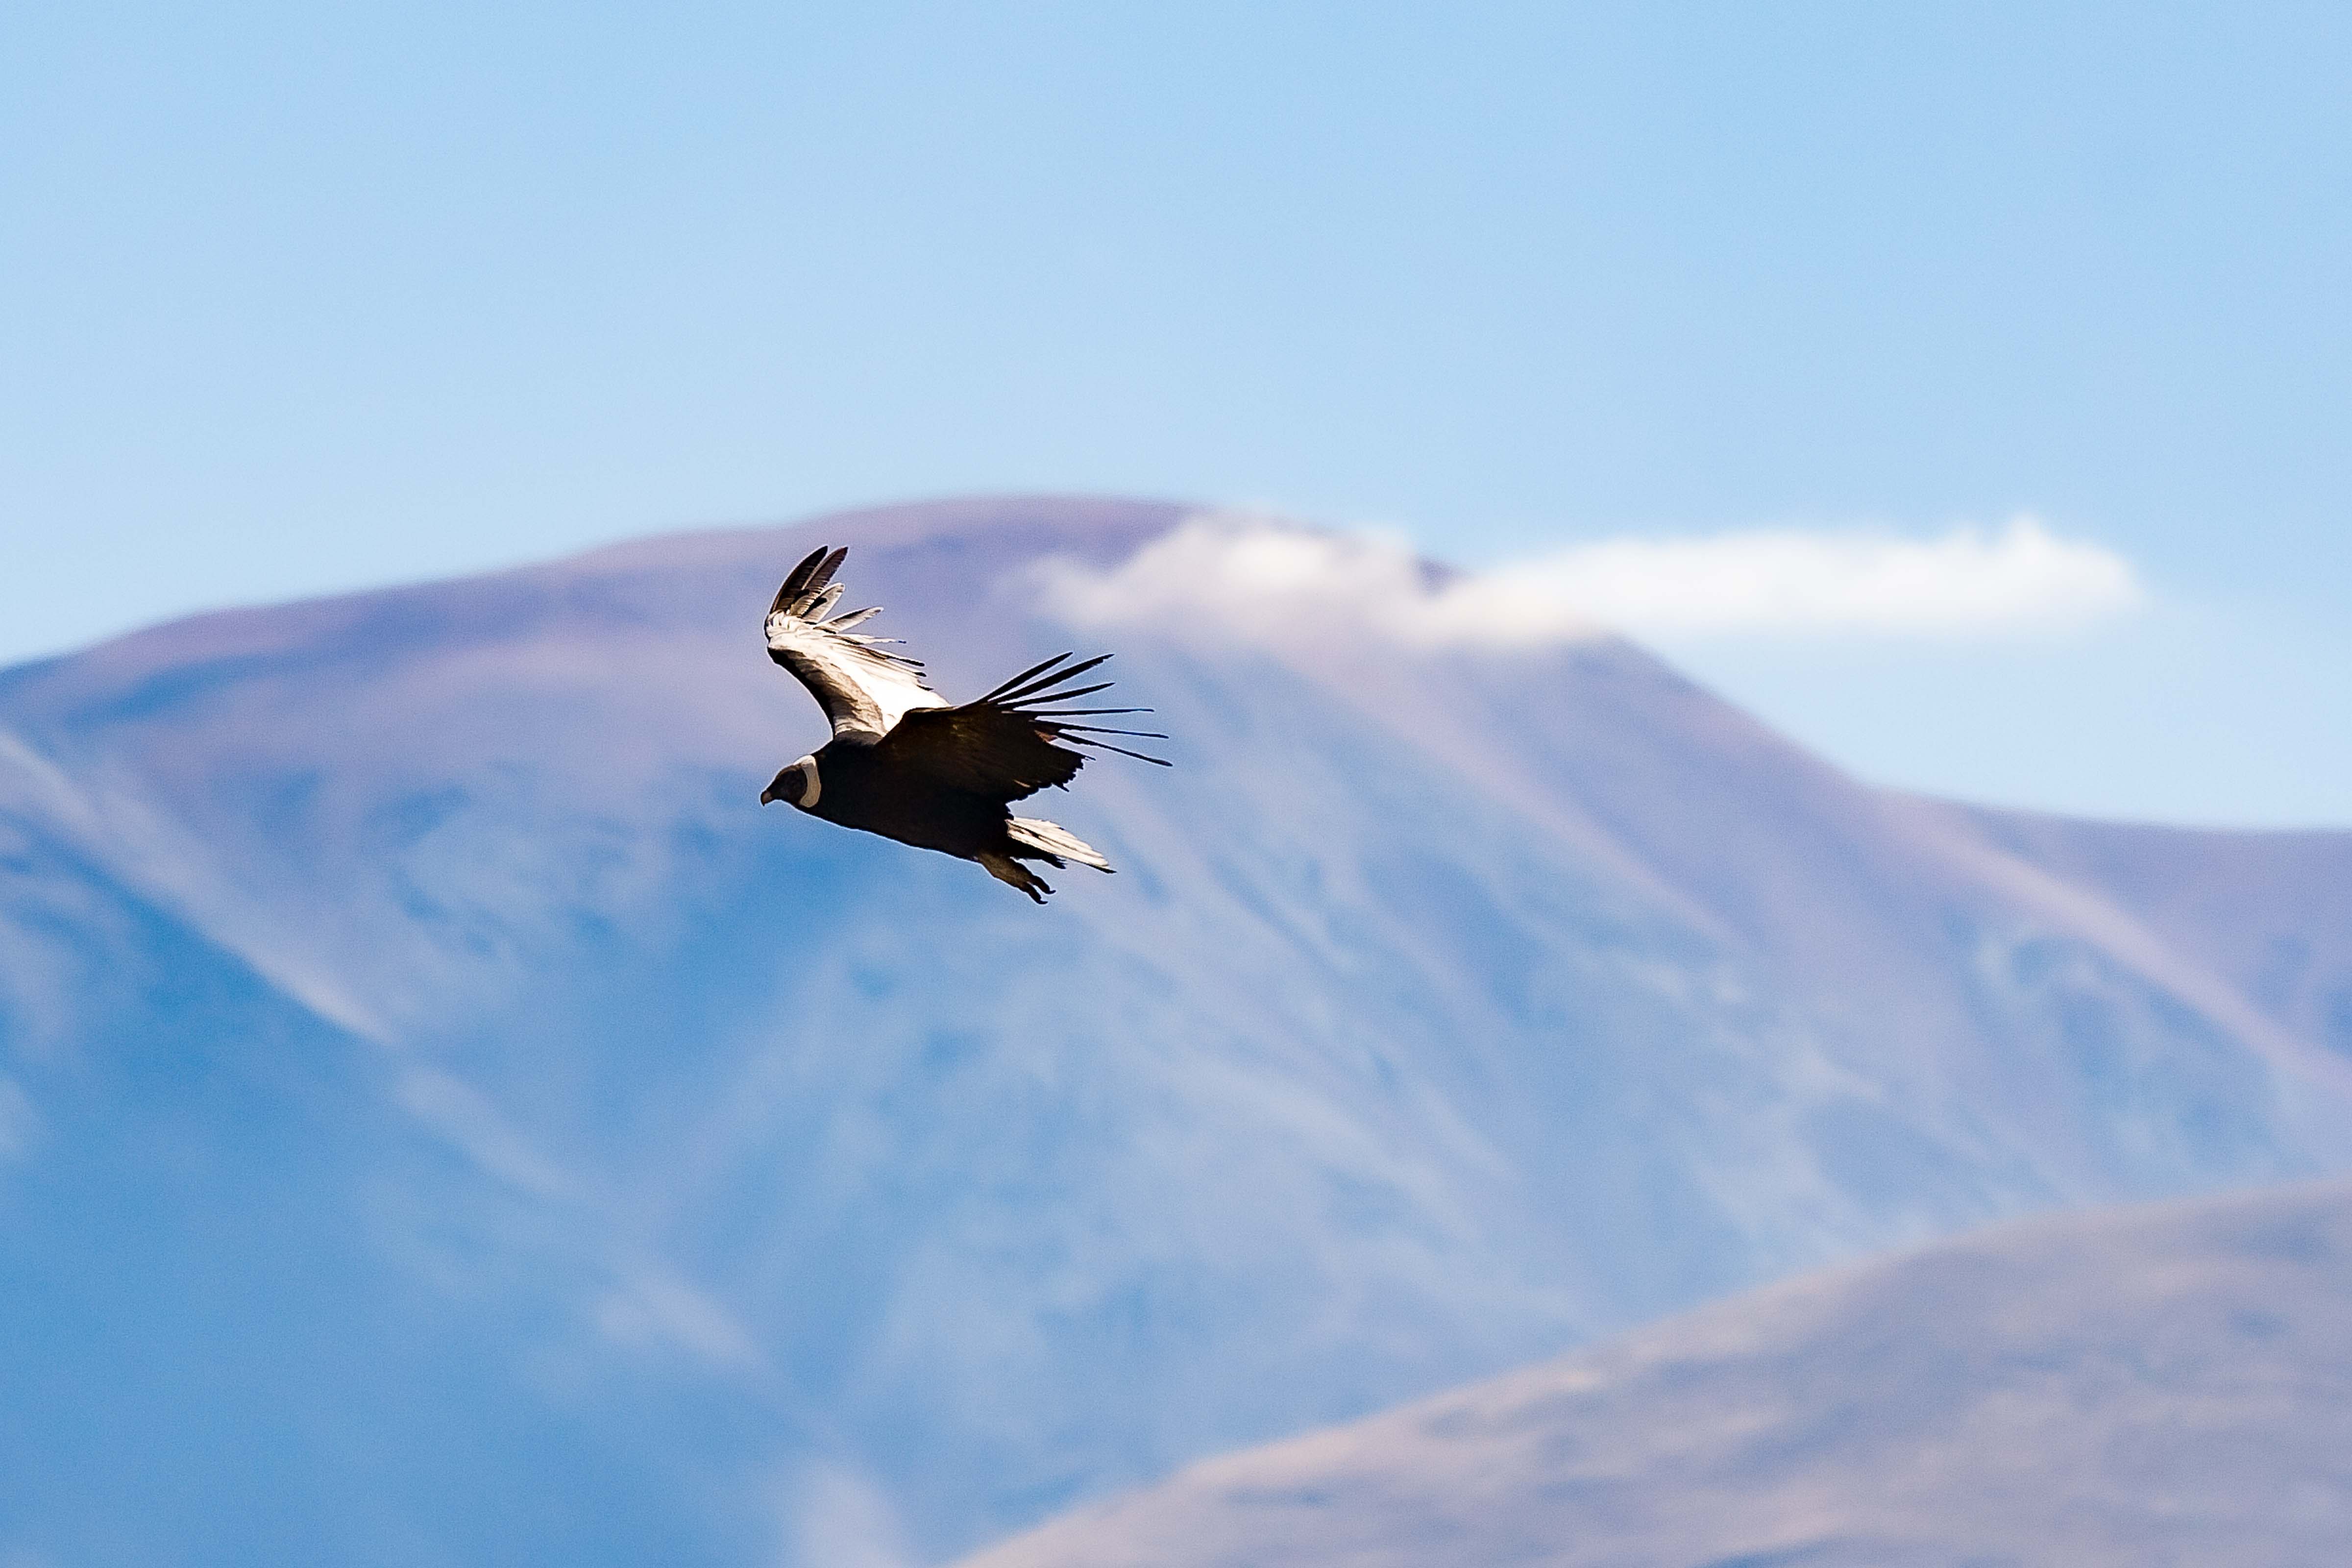 Argentina, Jujuy Prov, Condor At Molulu Mountains, 2010, IMG 8402 CU1